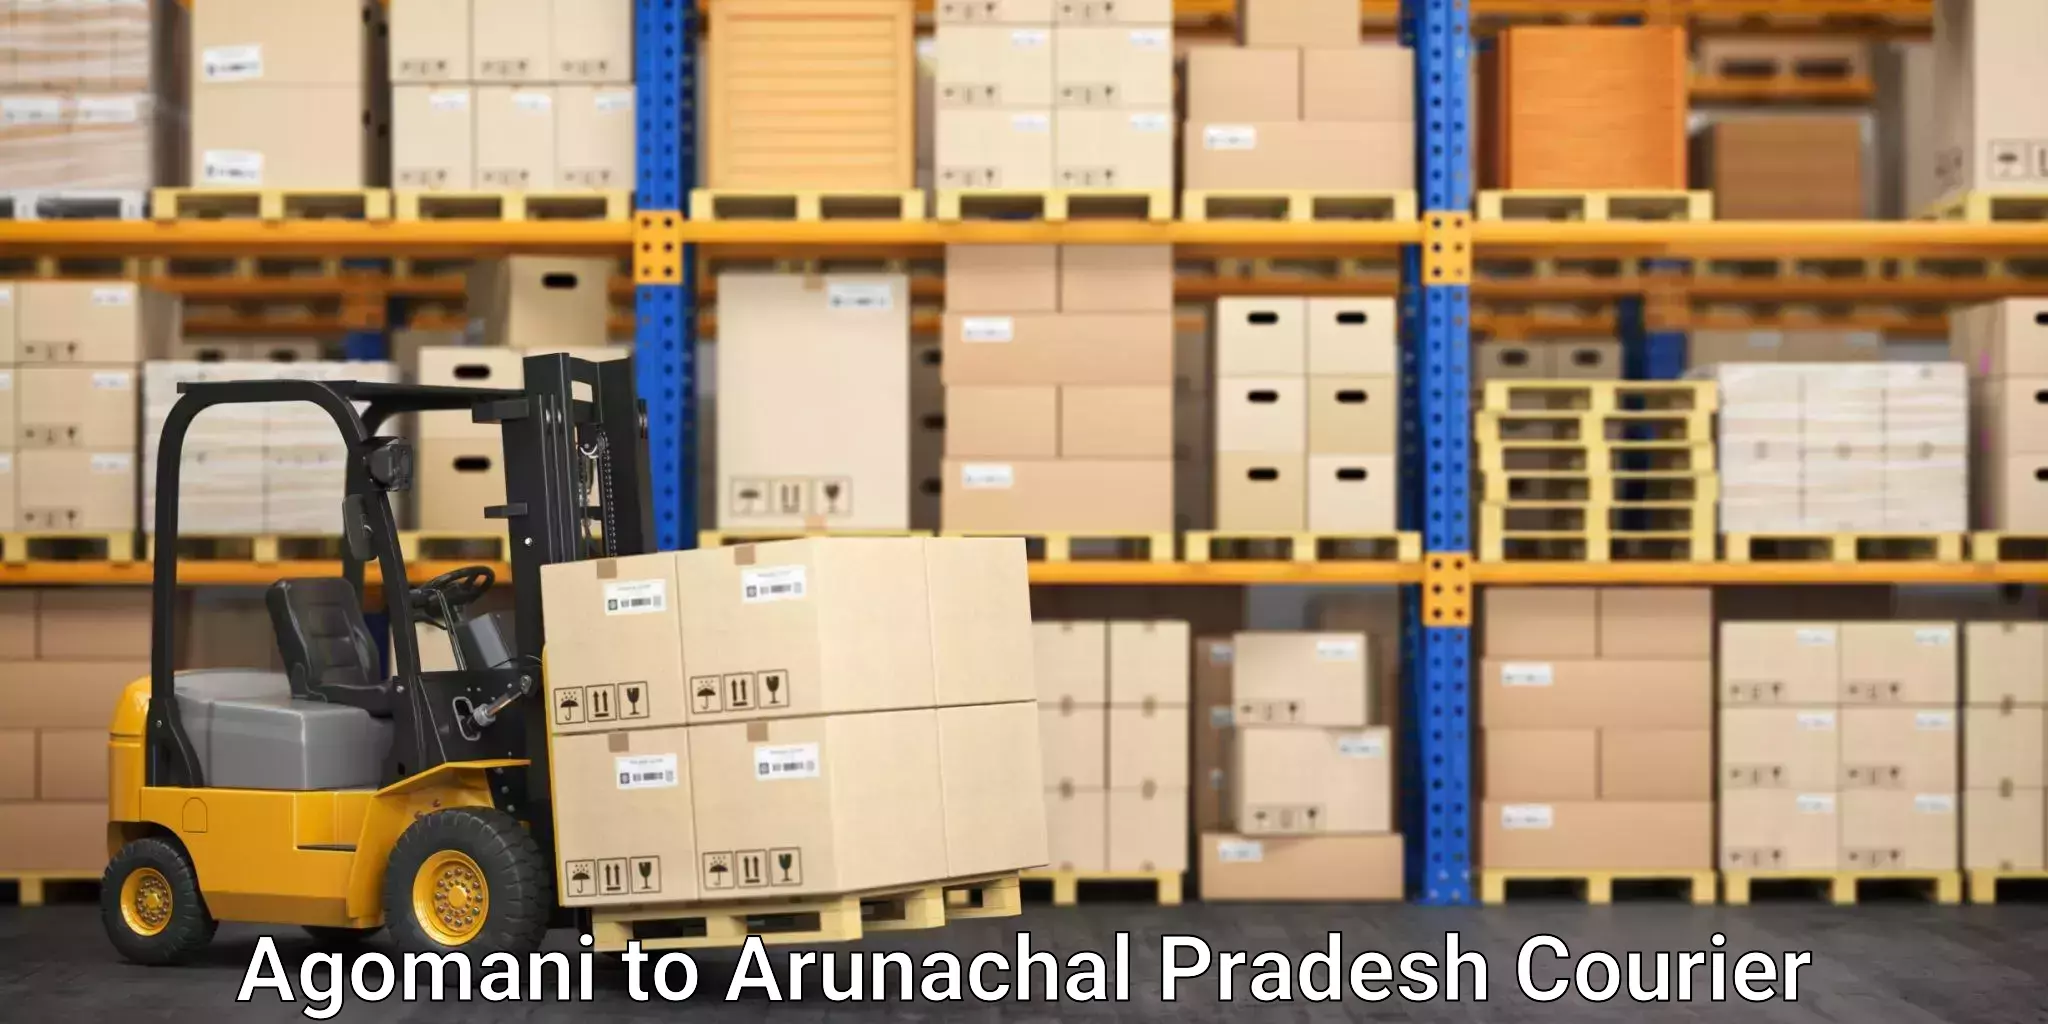 Express courier facilities Agomani to Arunachal Pradesh